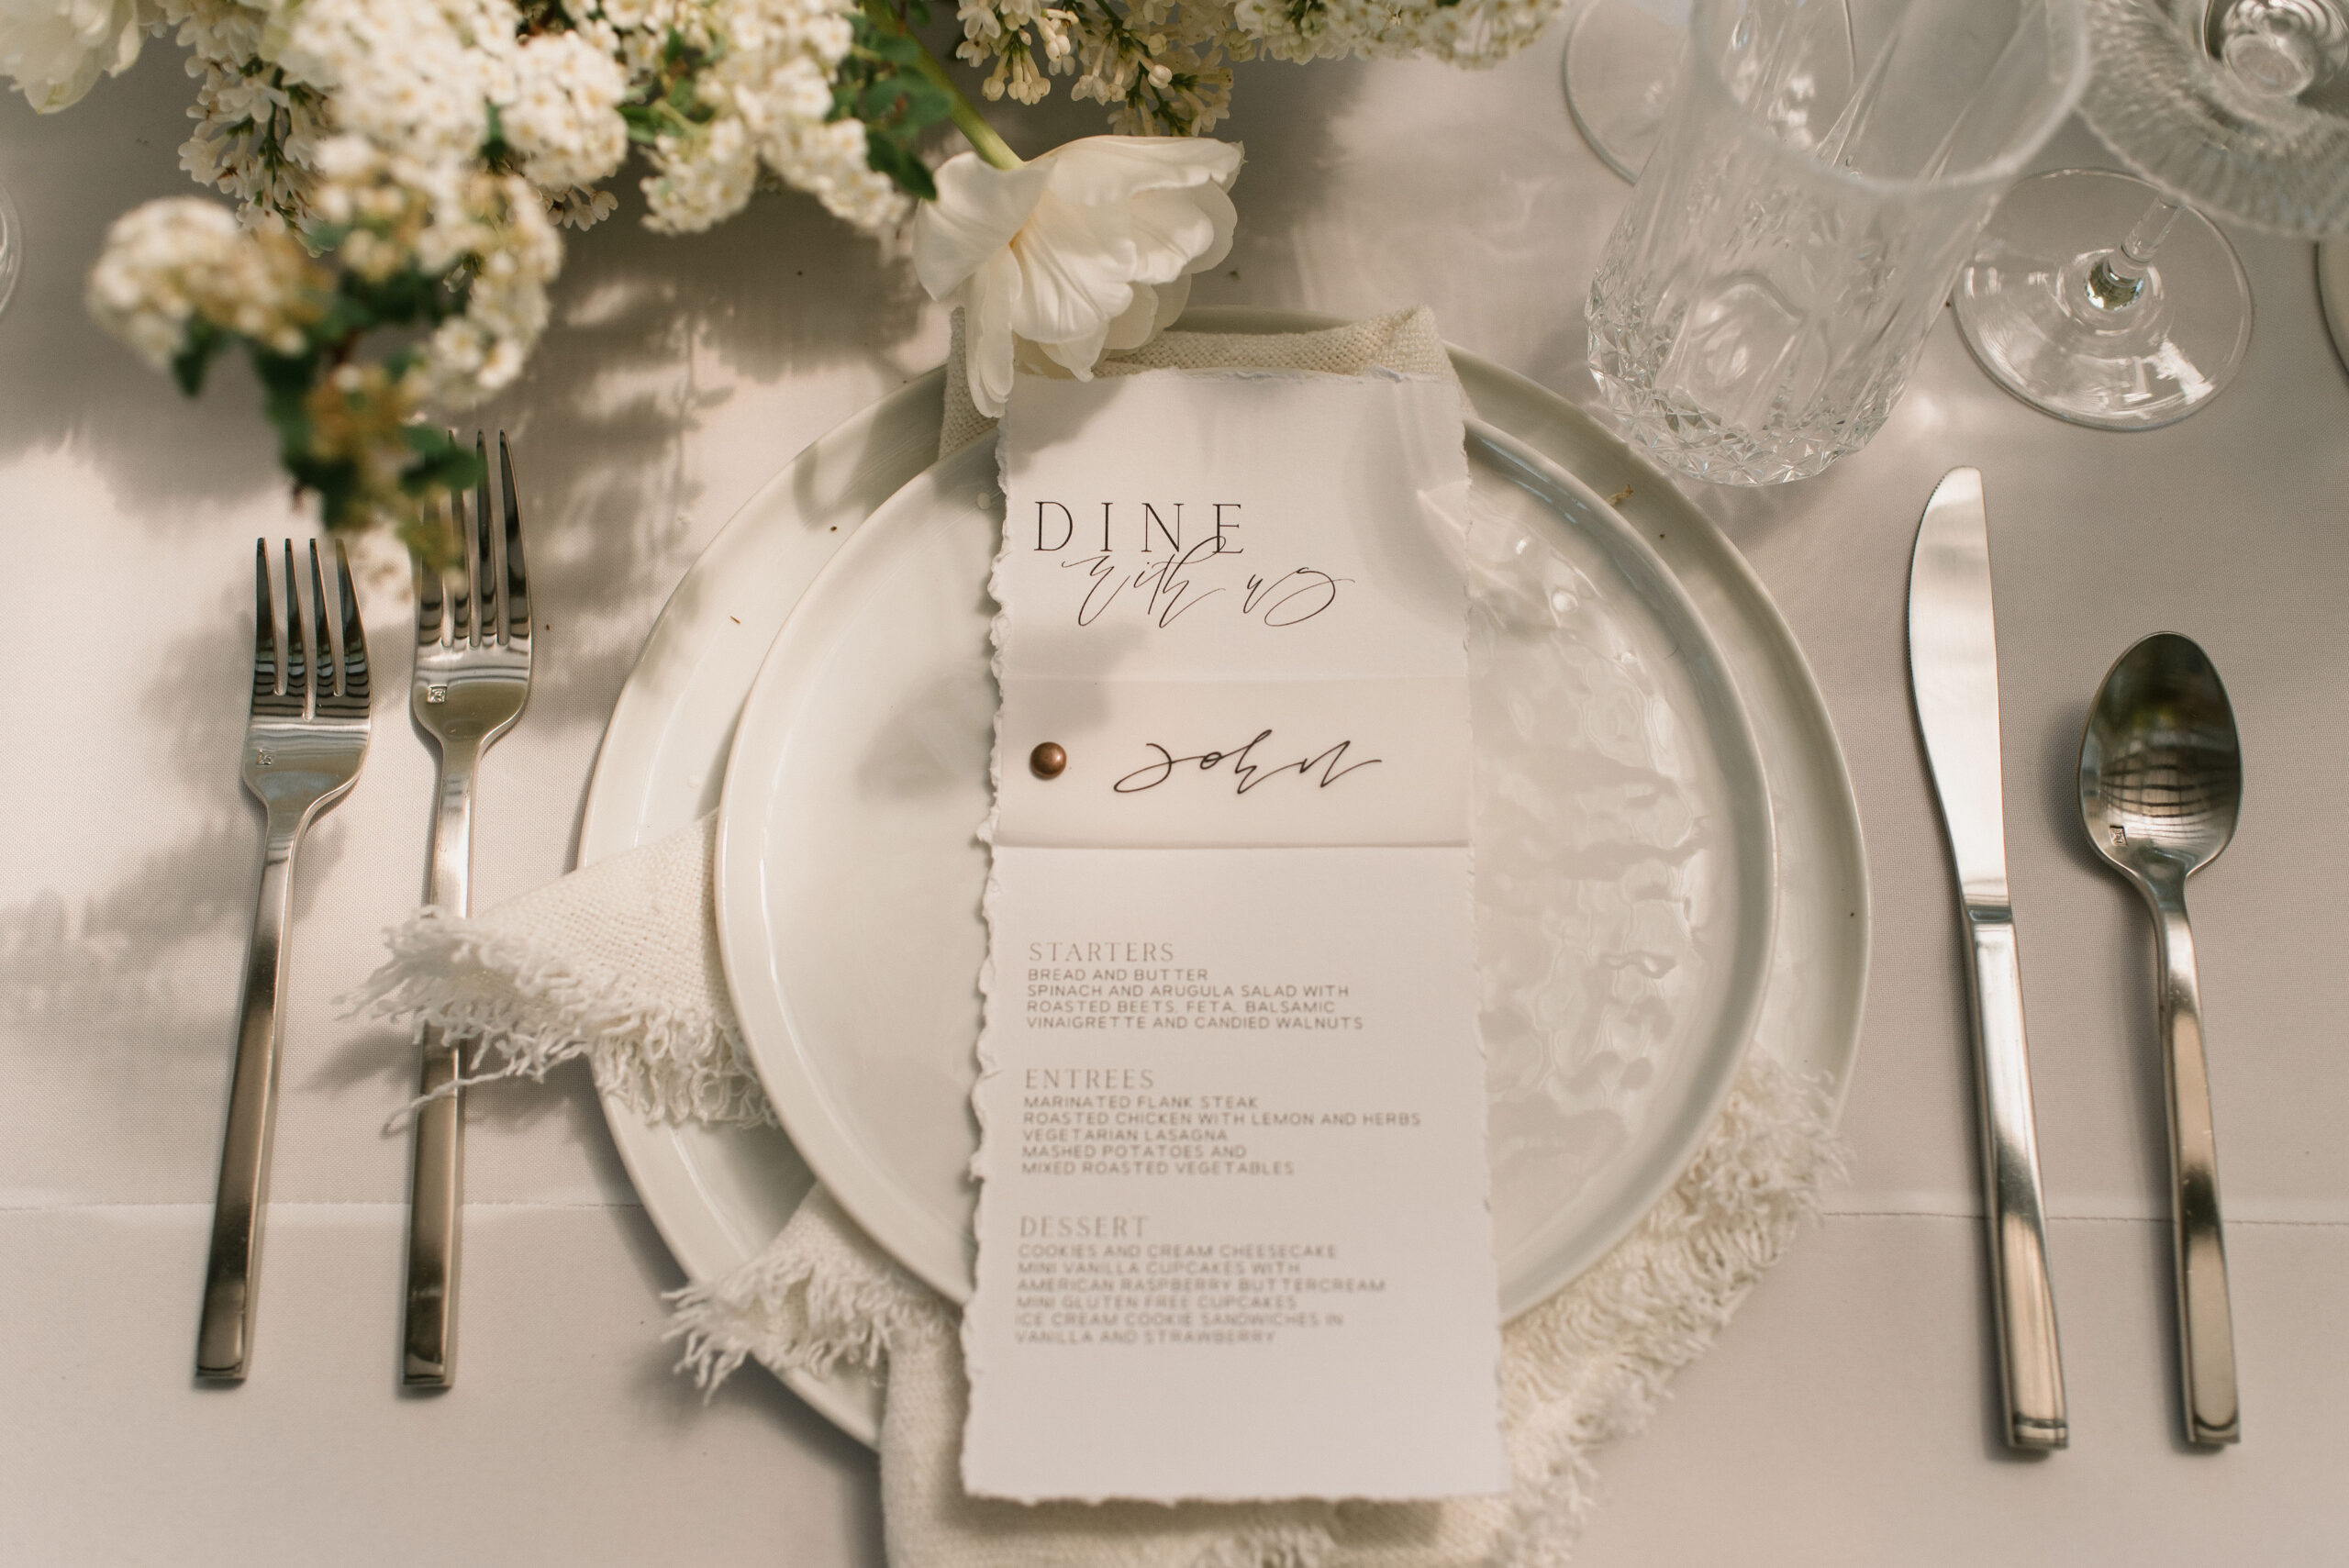 paper menu details from european-inspired wedding venue photos